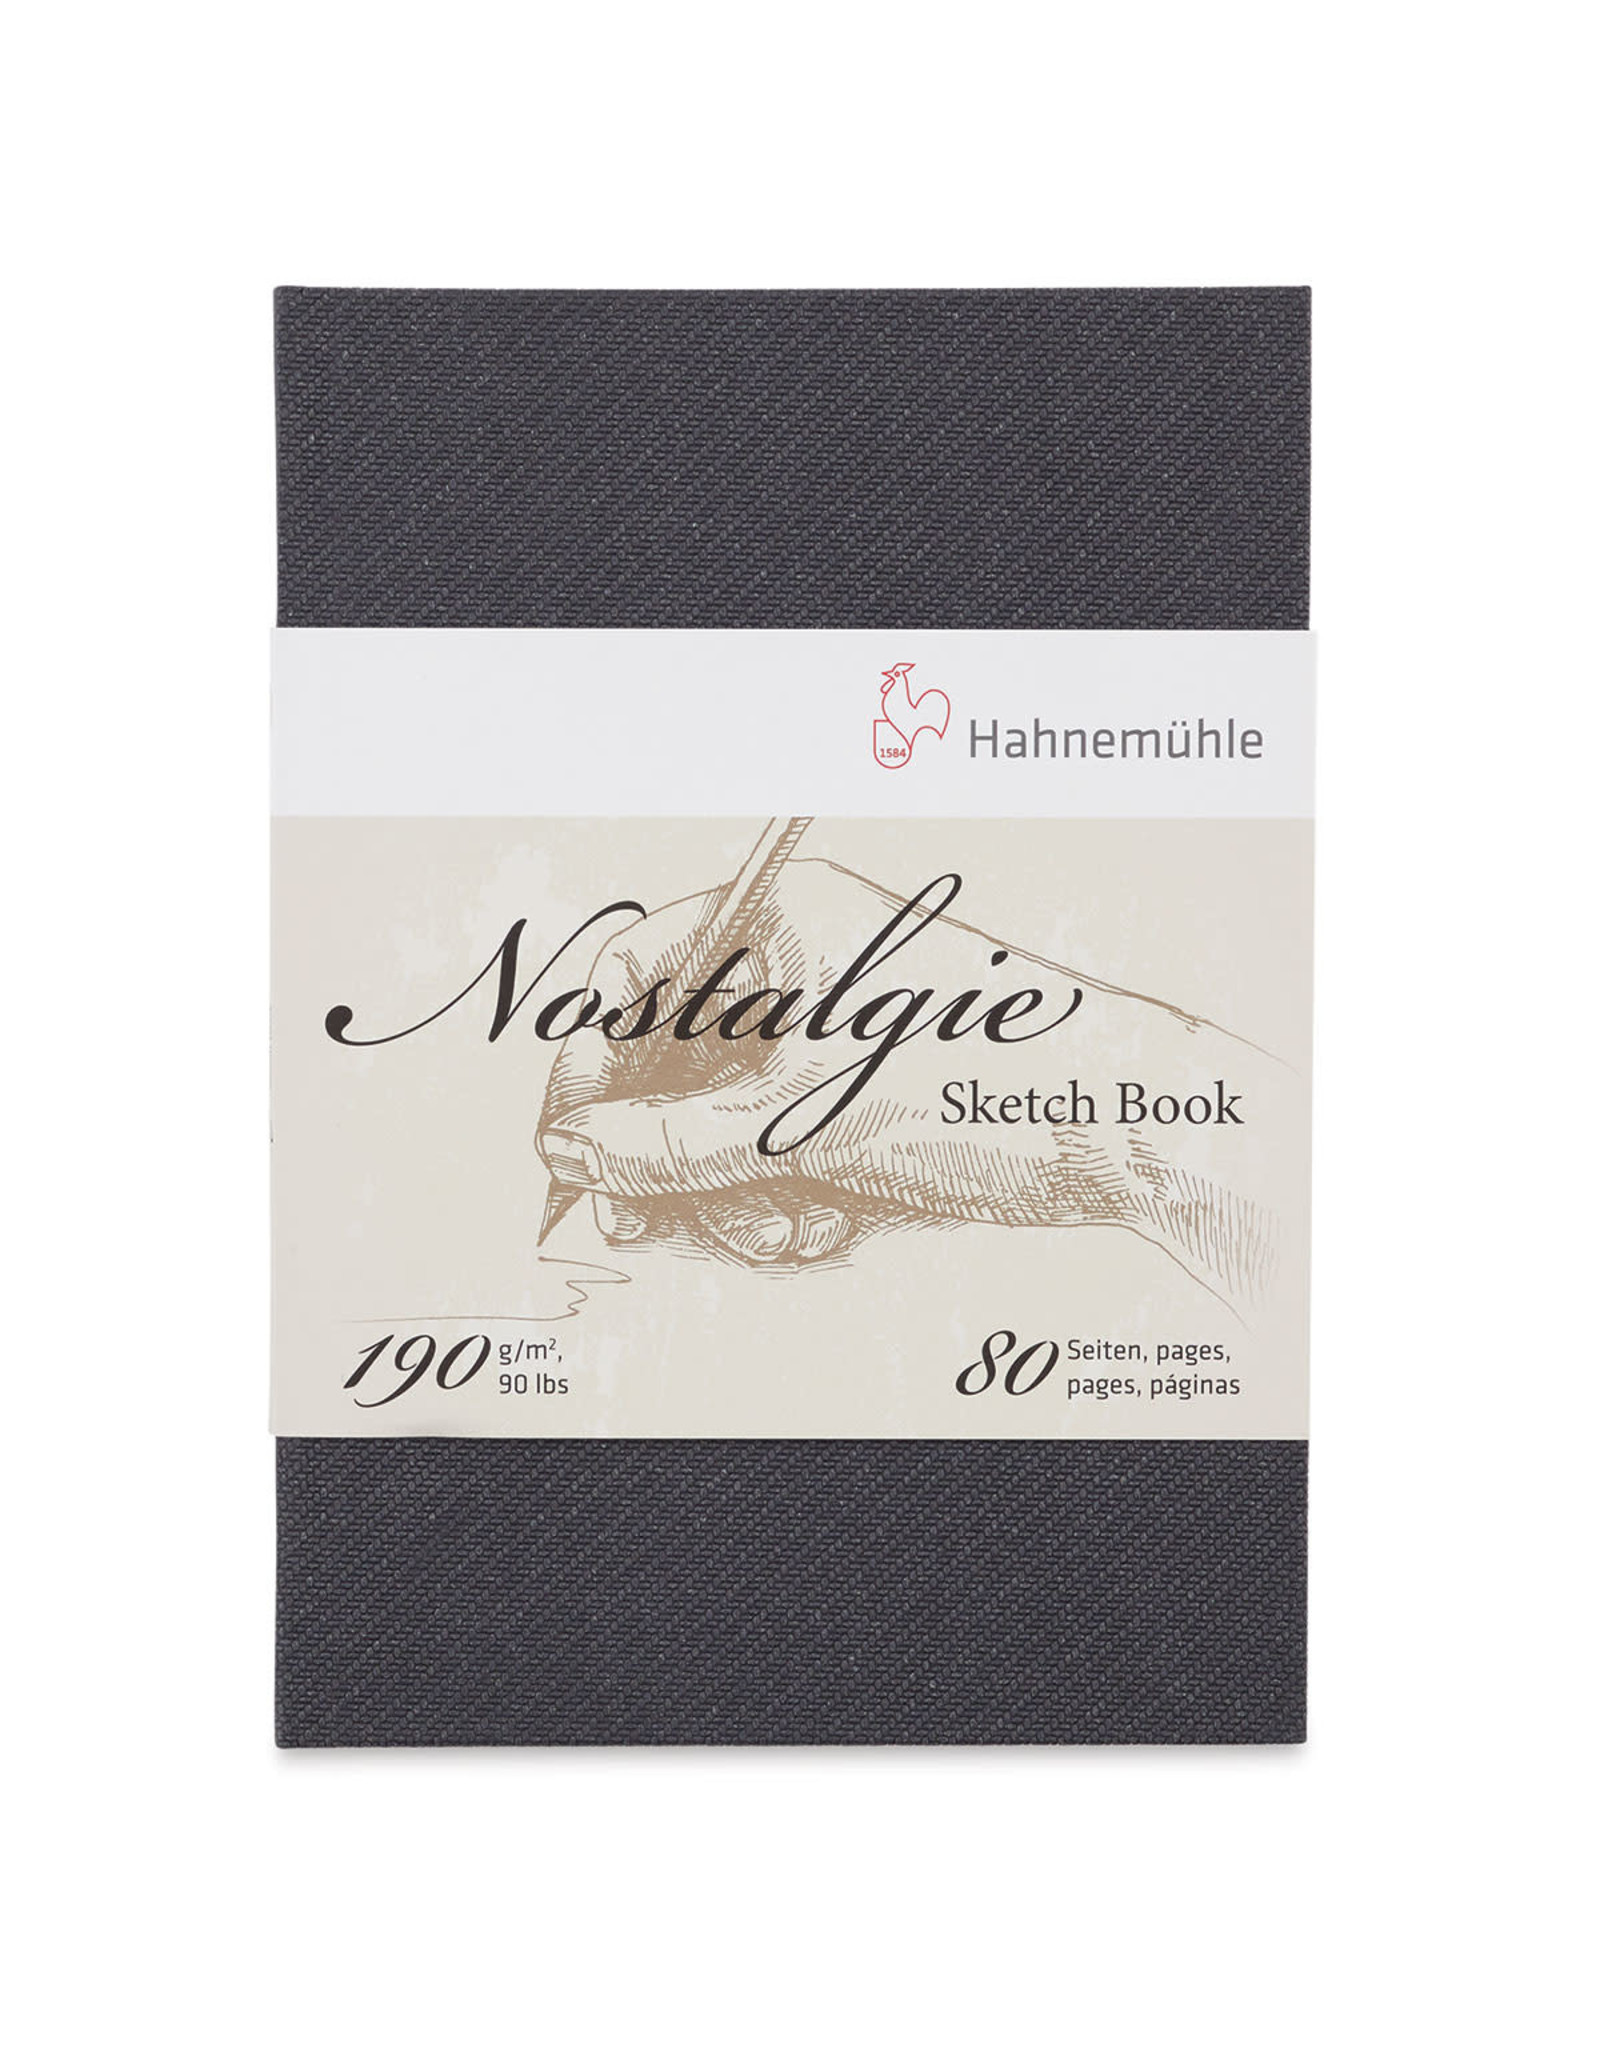 Hahnemuhle Hahnemuhle Nostalgie Hard Cover Sketchbook, Portrait, 15¼cm x 21cm